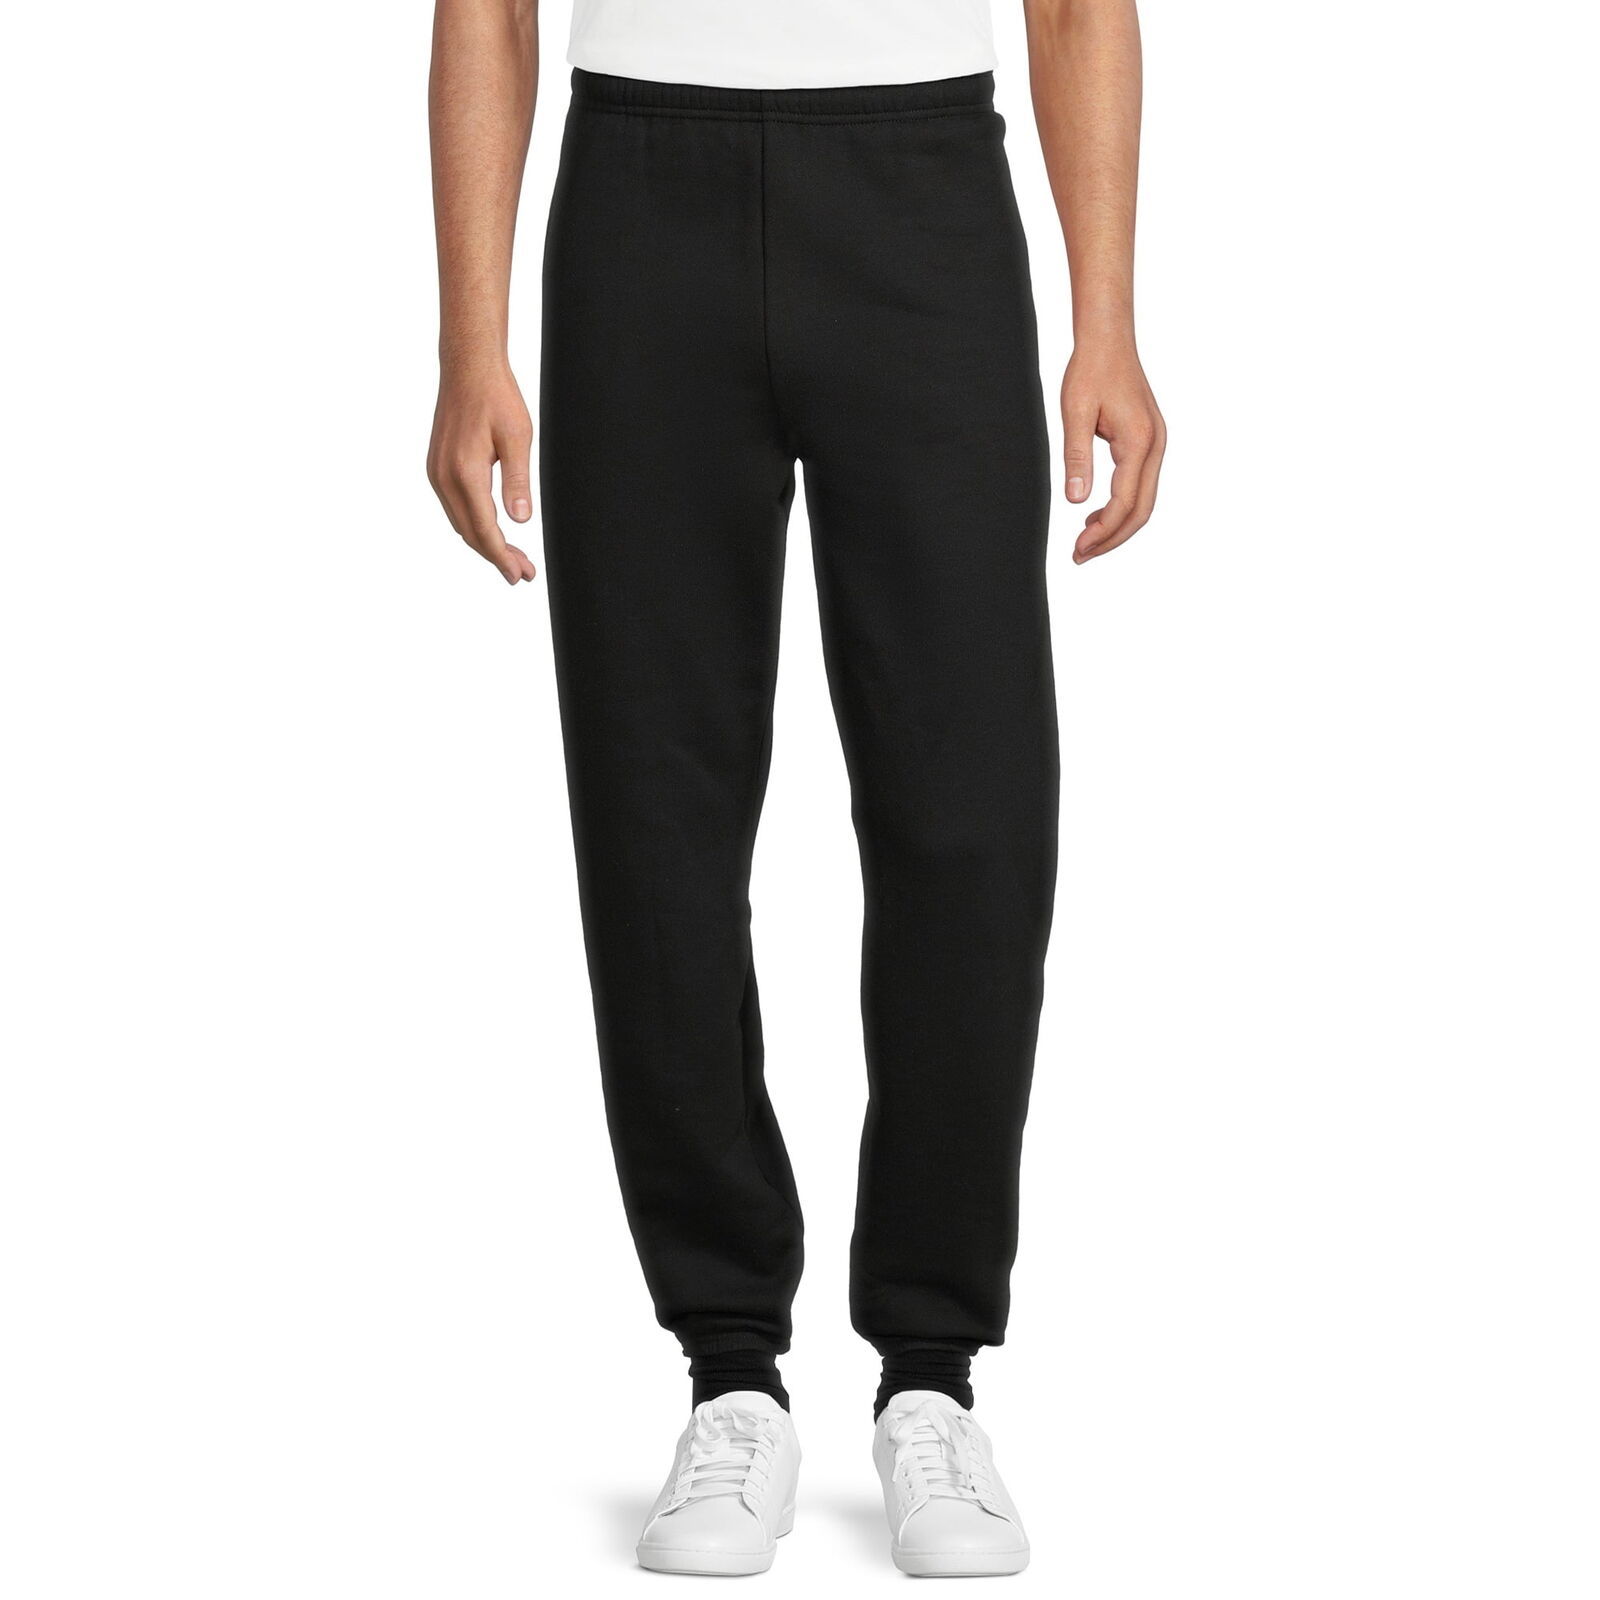 Primary image for Athletic Works Men's Fleece Elastic Bottom Sweatpants Rich Black Size 4XL (52-54